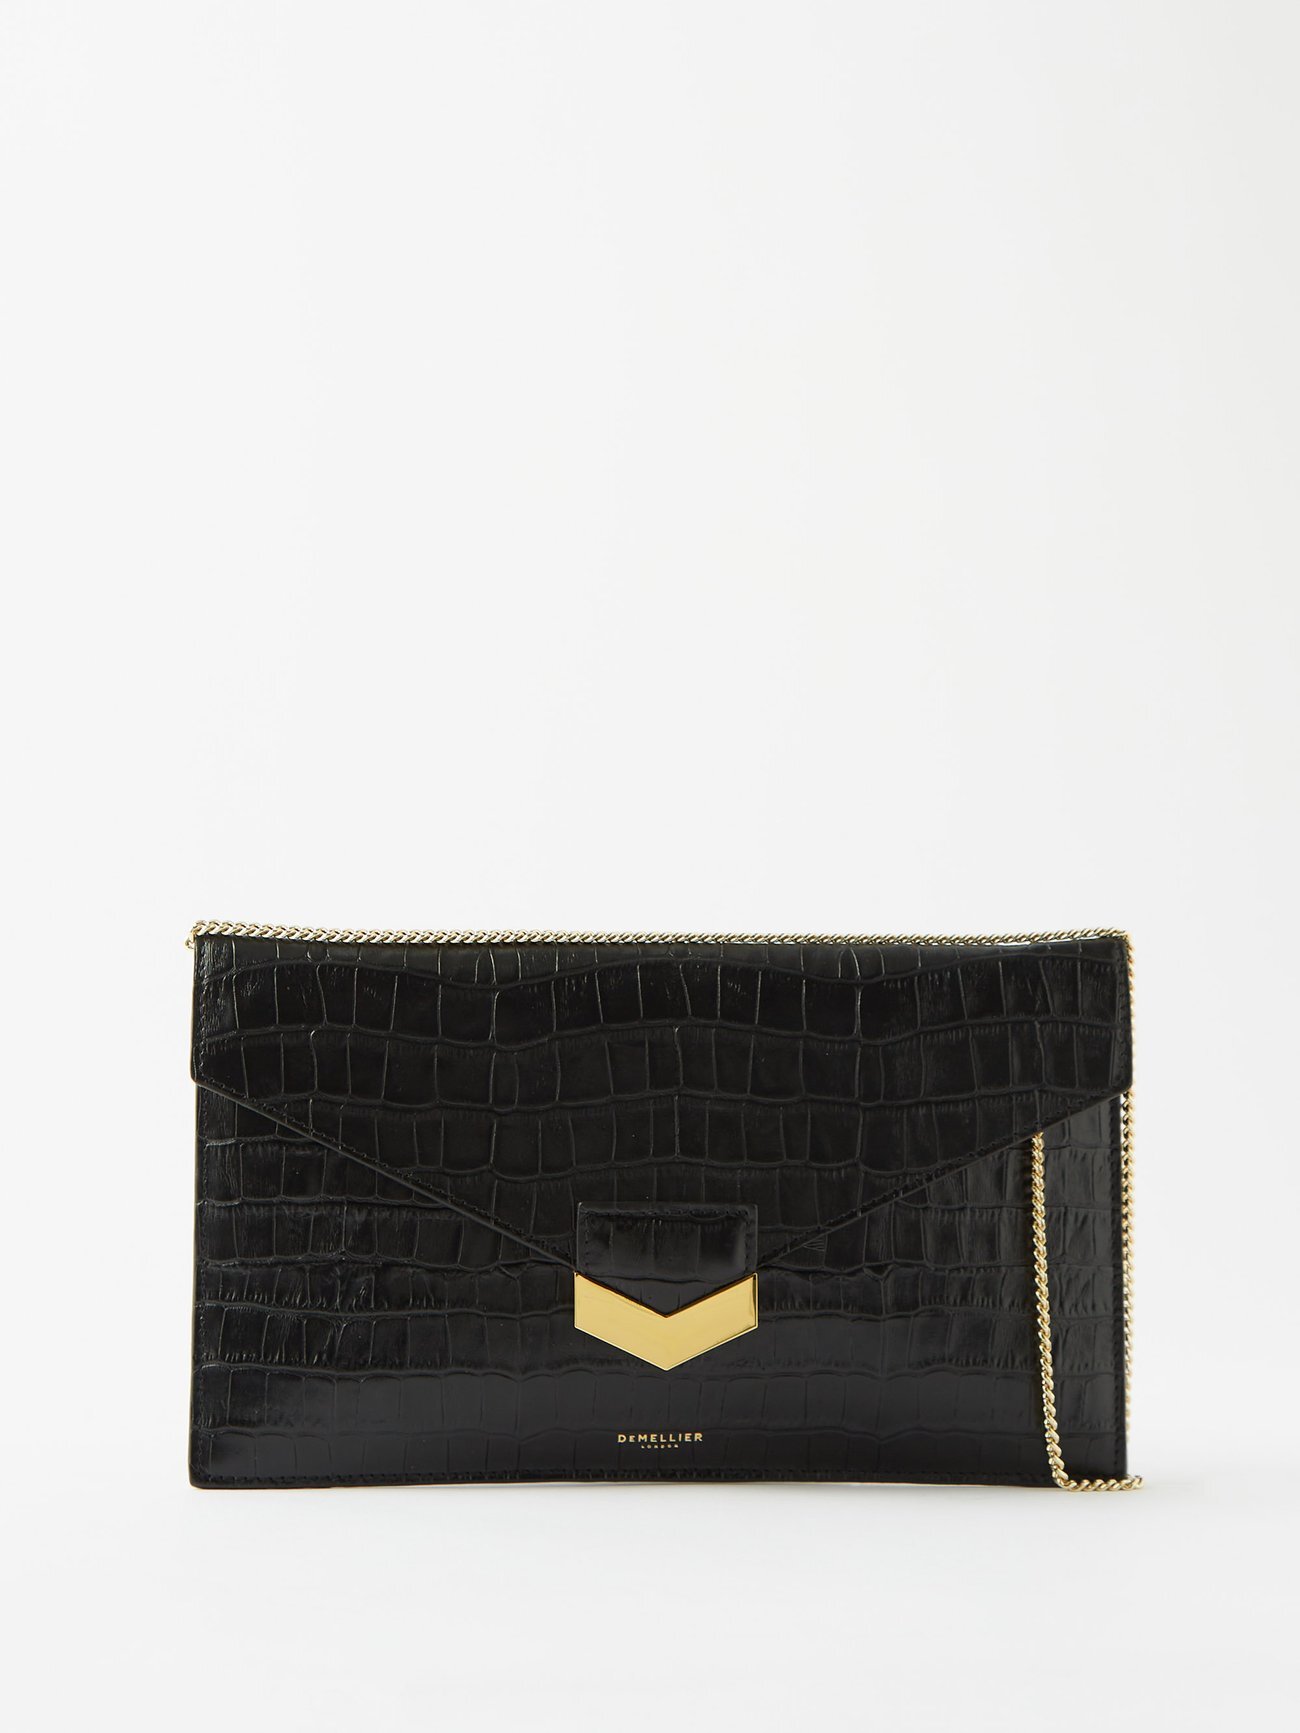 Demellier - London Croc-effect Leather Clutch Bag - Womens - Black